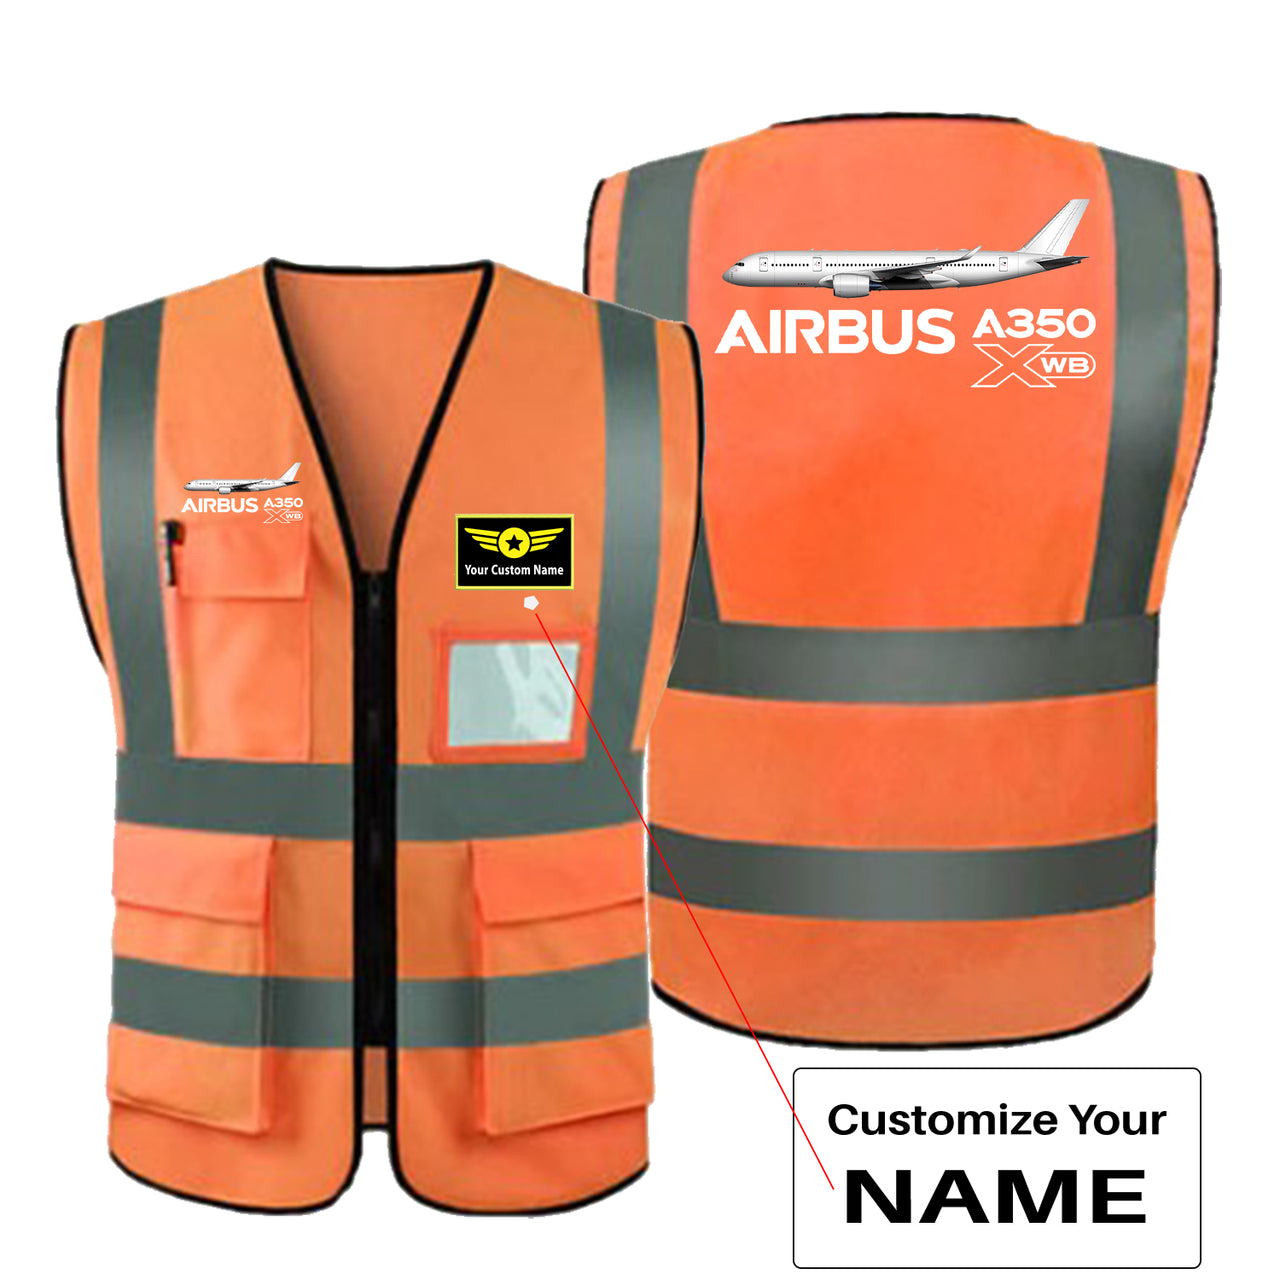 The Airbus A350 WXB Designed Reflective Vests